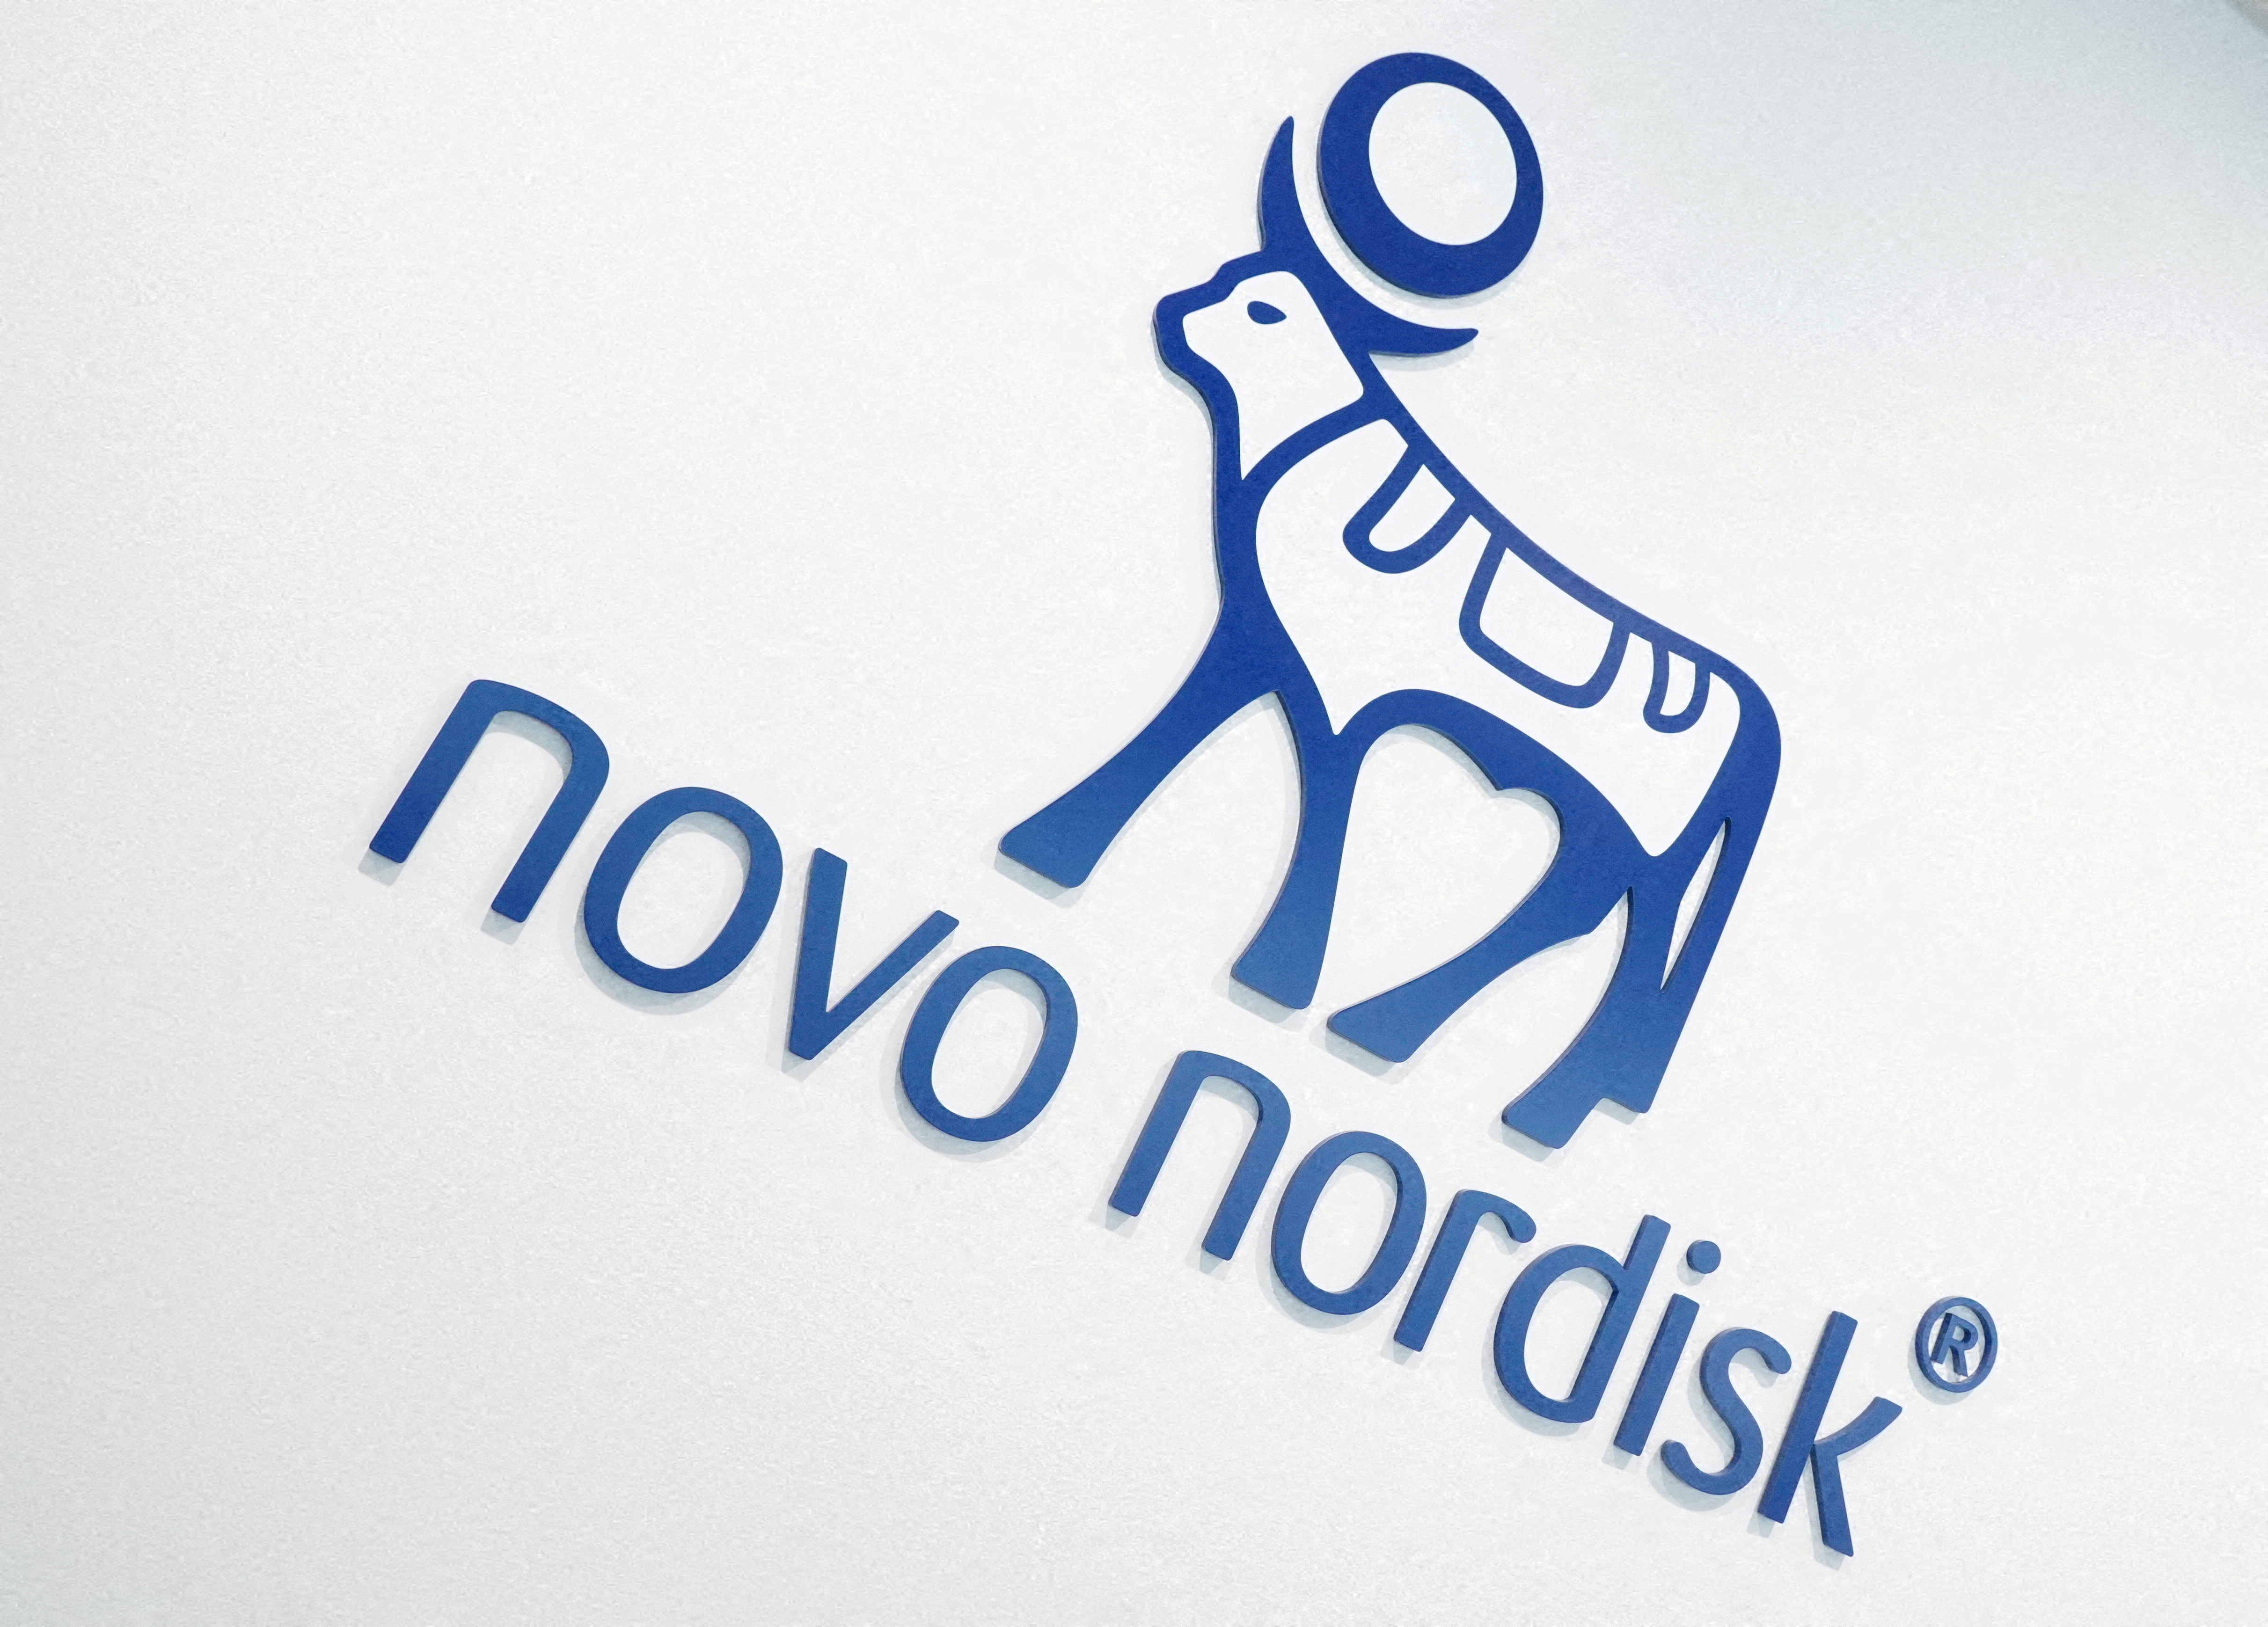 Novo Nordisk logo above the entrance to their offices in Copenhagen